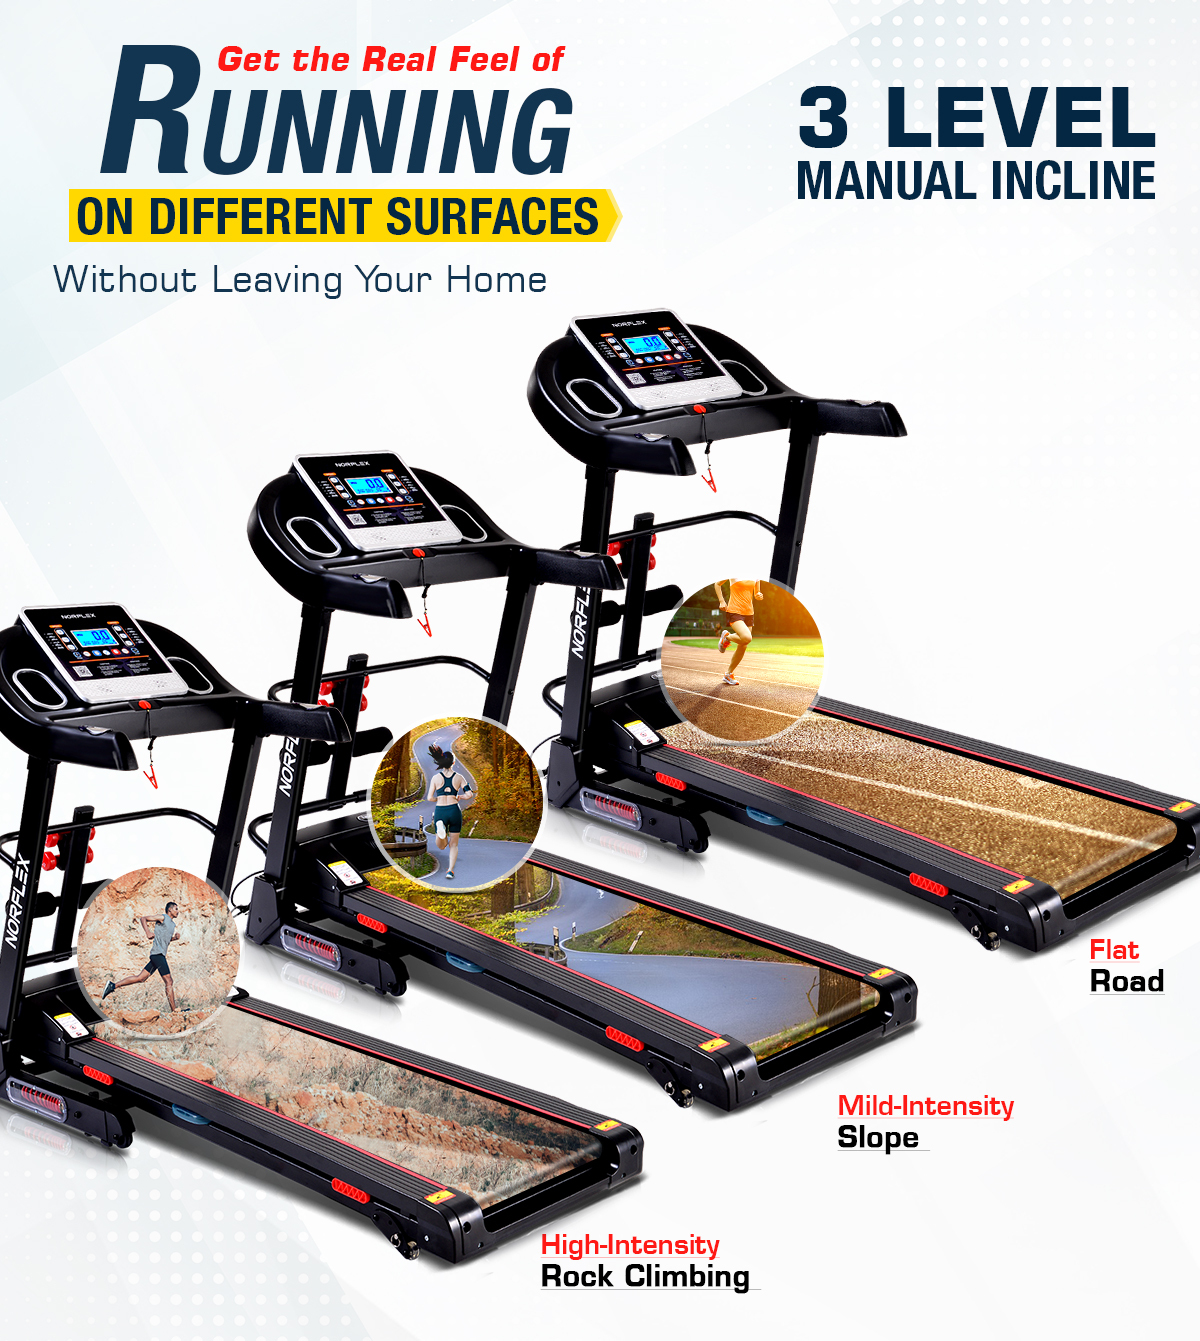 NORFLX 3.0CHP Treadmill Home Gym Exercise Machine Fitness Tracker Equipment